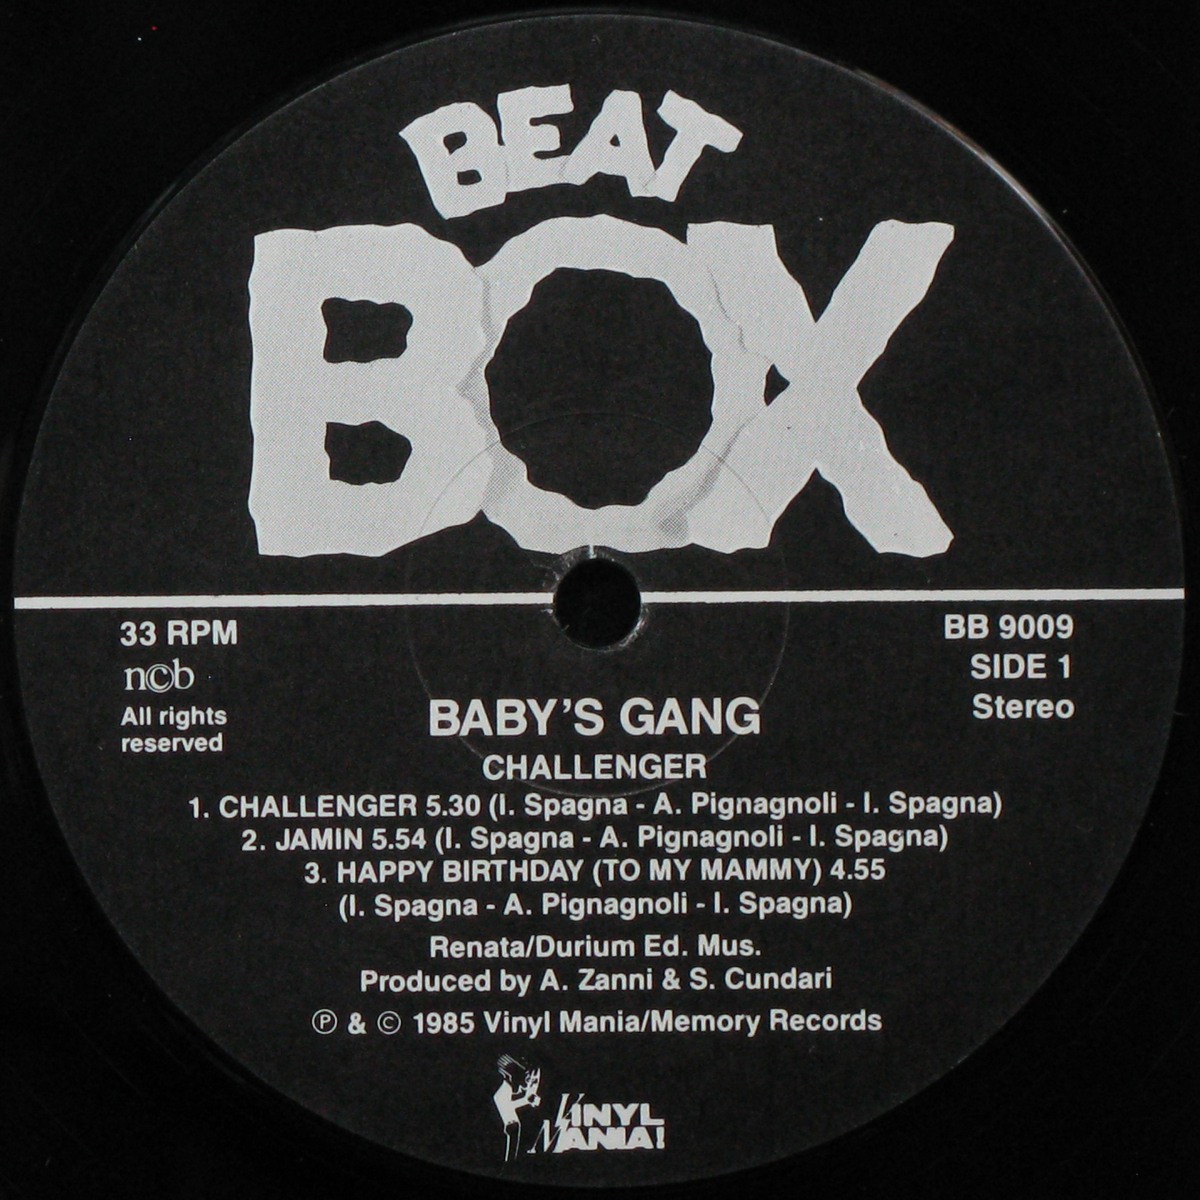 Gang challenger. Baby's gang Challenger 1985. Babys gang "Challenger". Baby s gang Челленджер. Обложки альбомов Baby's gang.